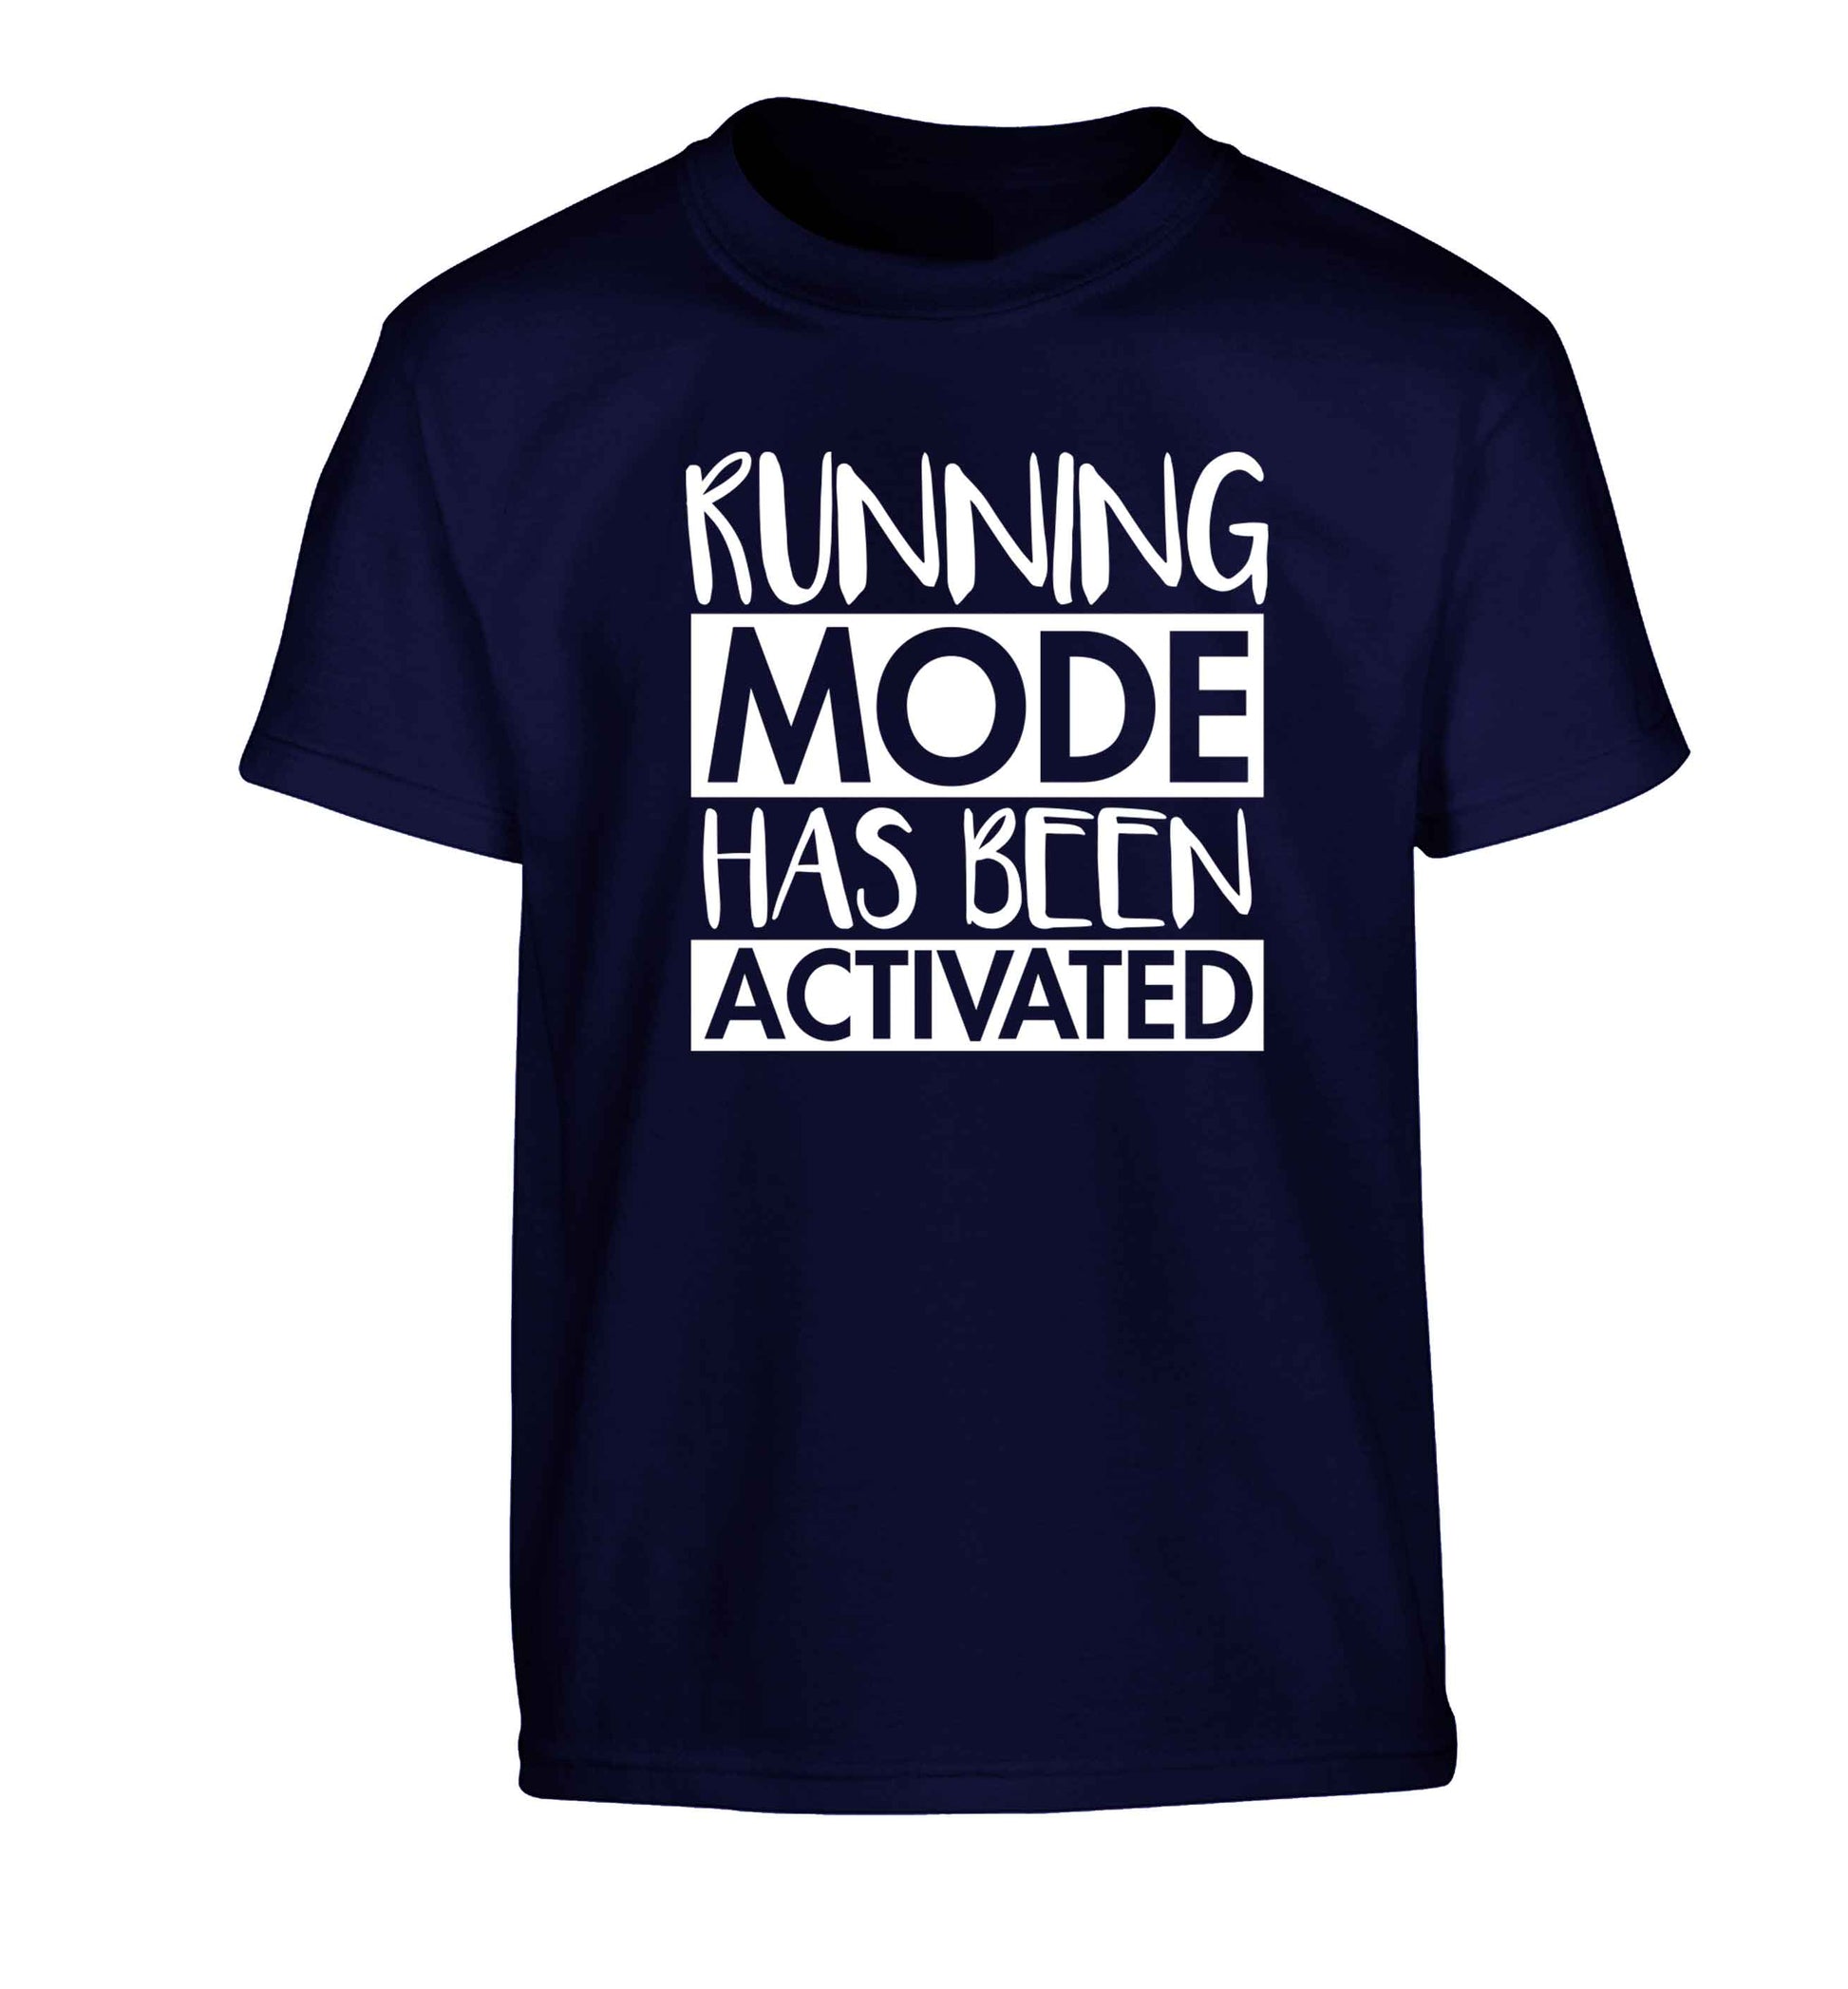 Running mode has been activated Children's navy Tshirt 12-13 Years